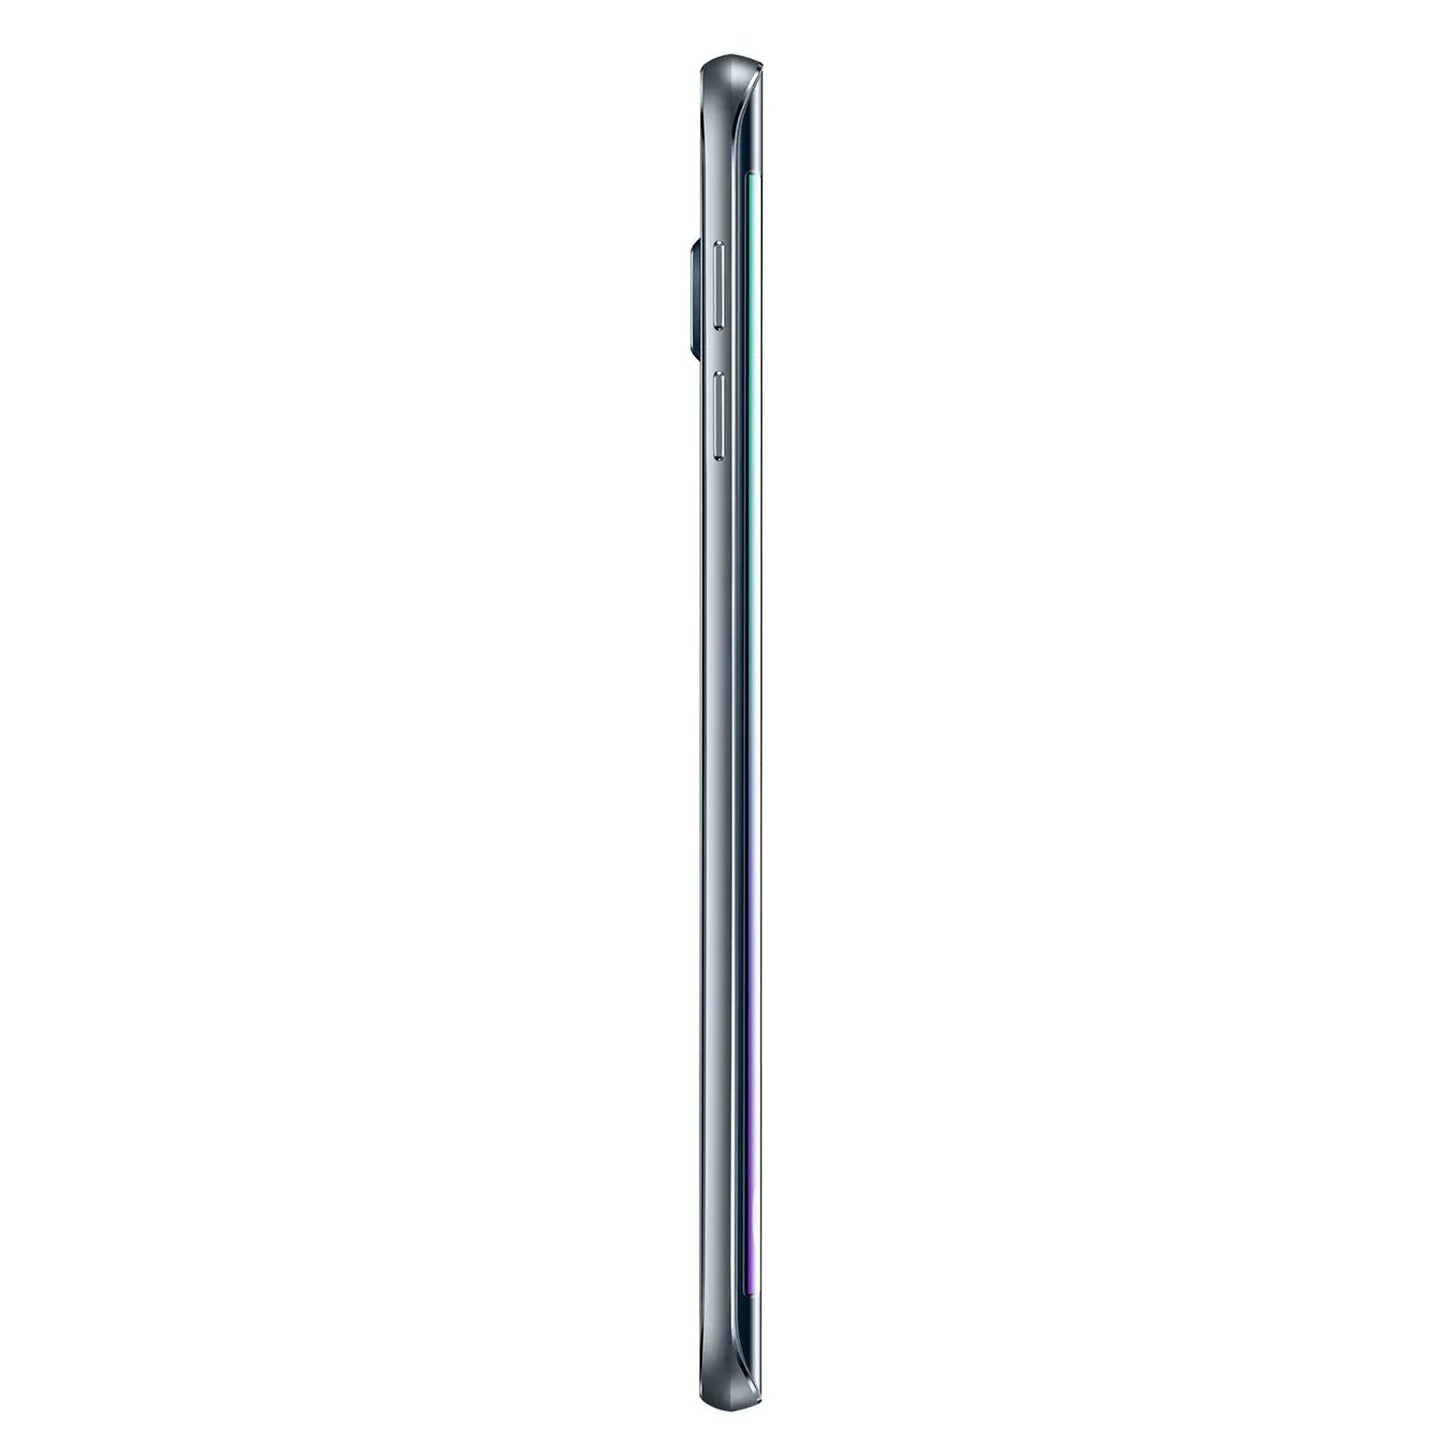 Samsung Galaxy S6 Edge SM-G925F Noir 32 Go Samsung